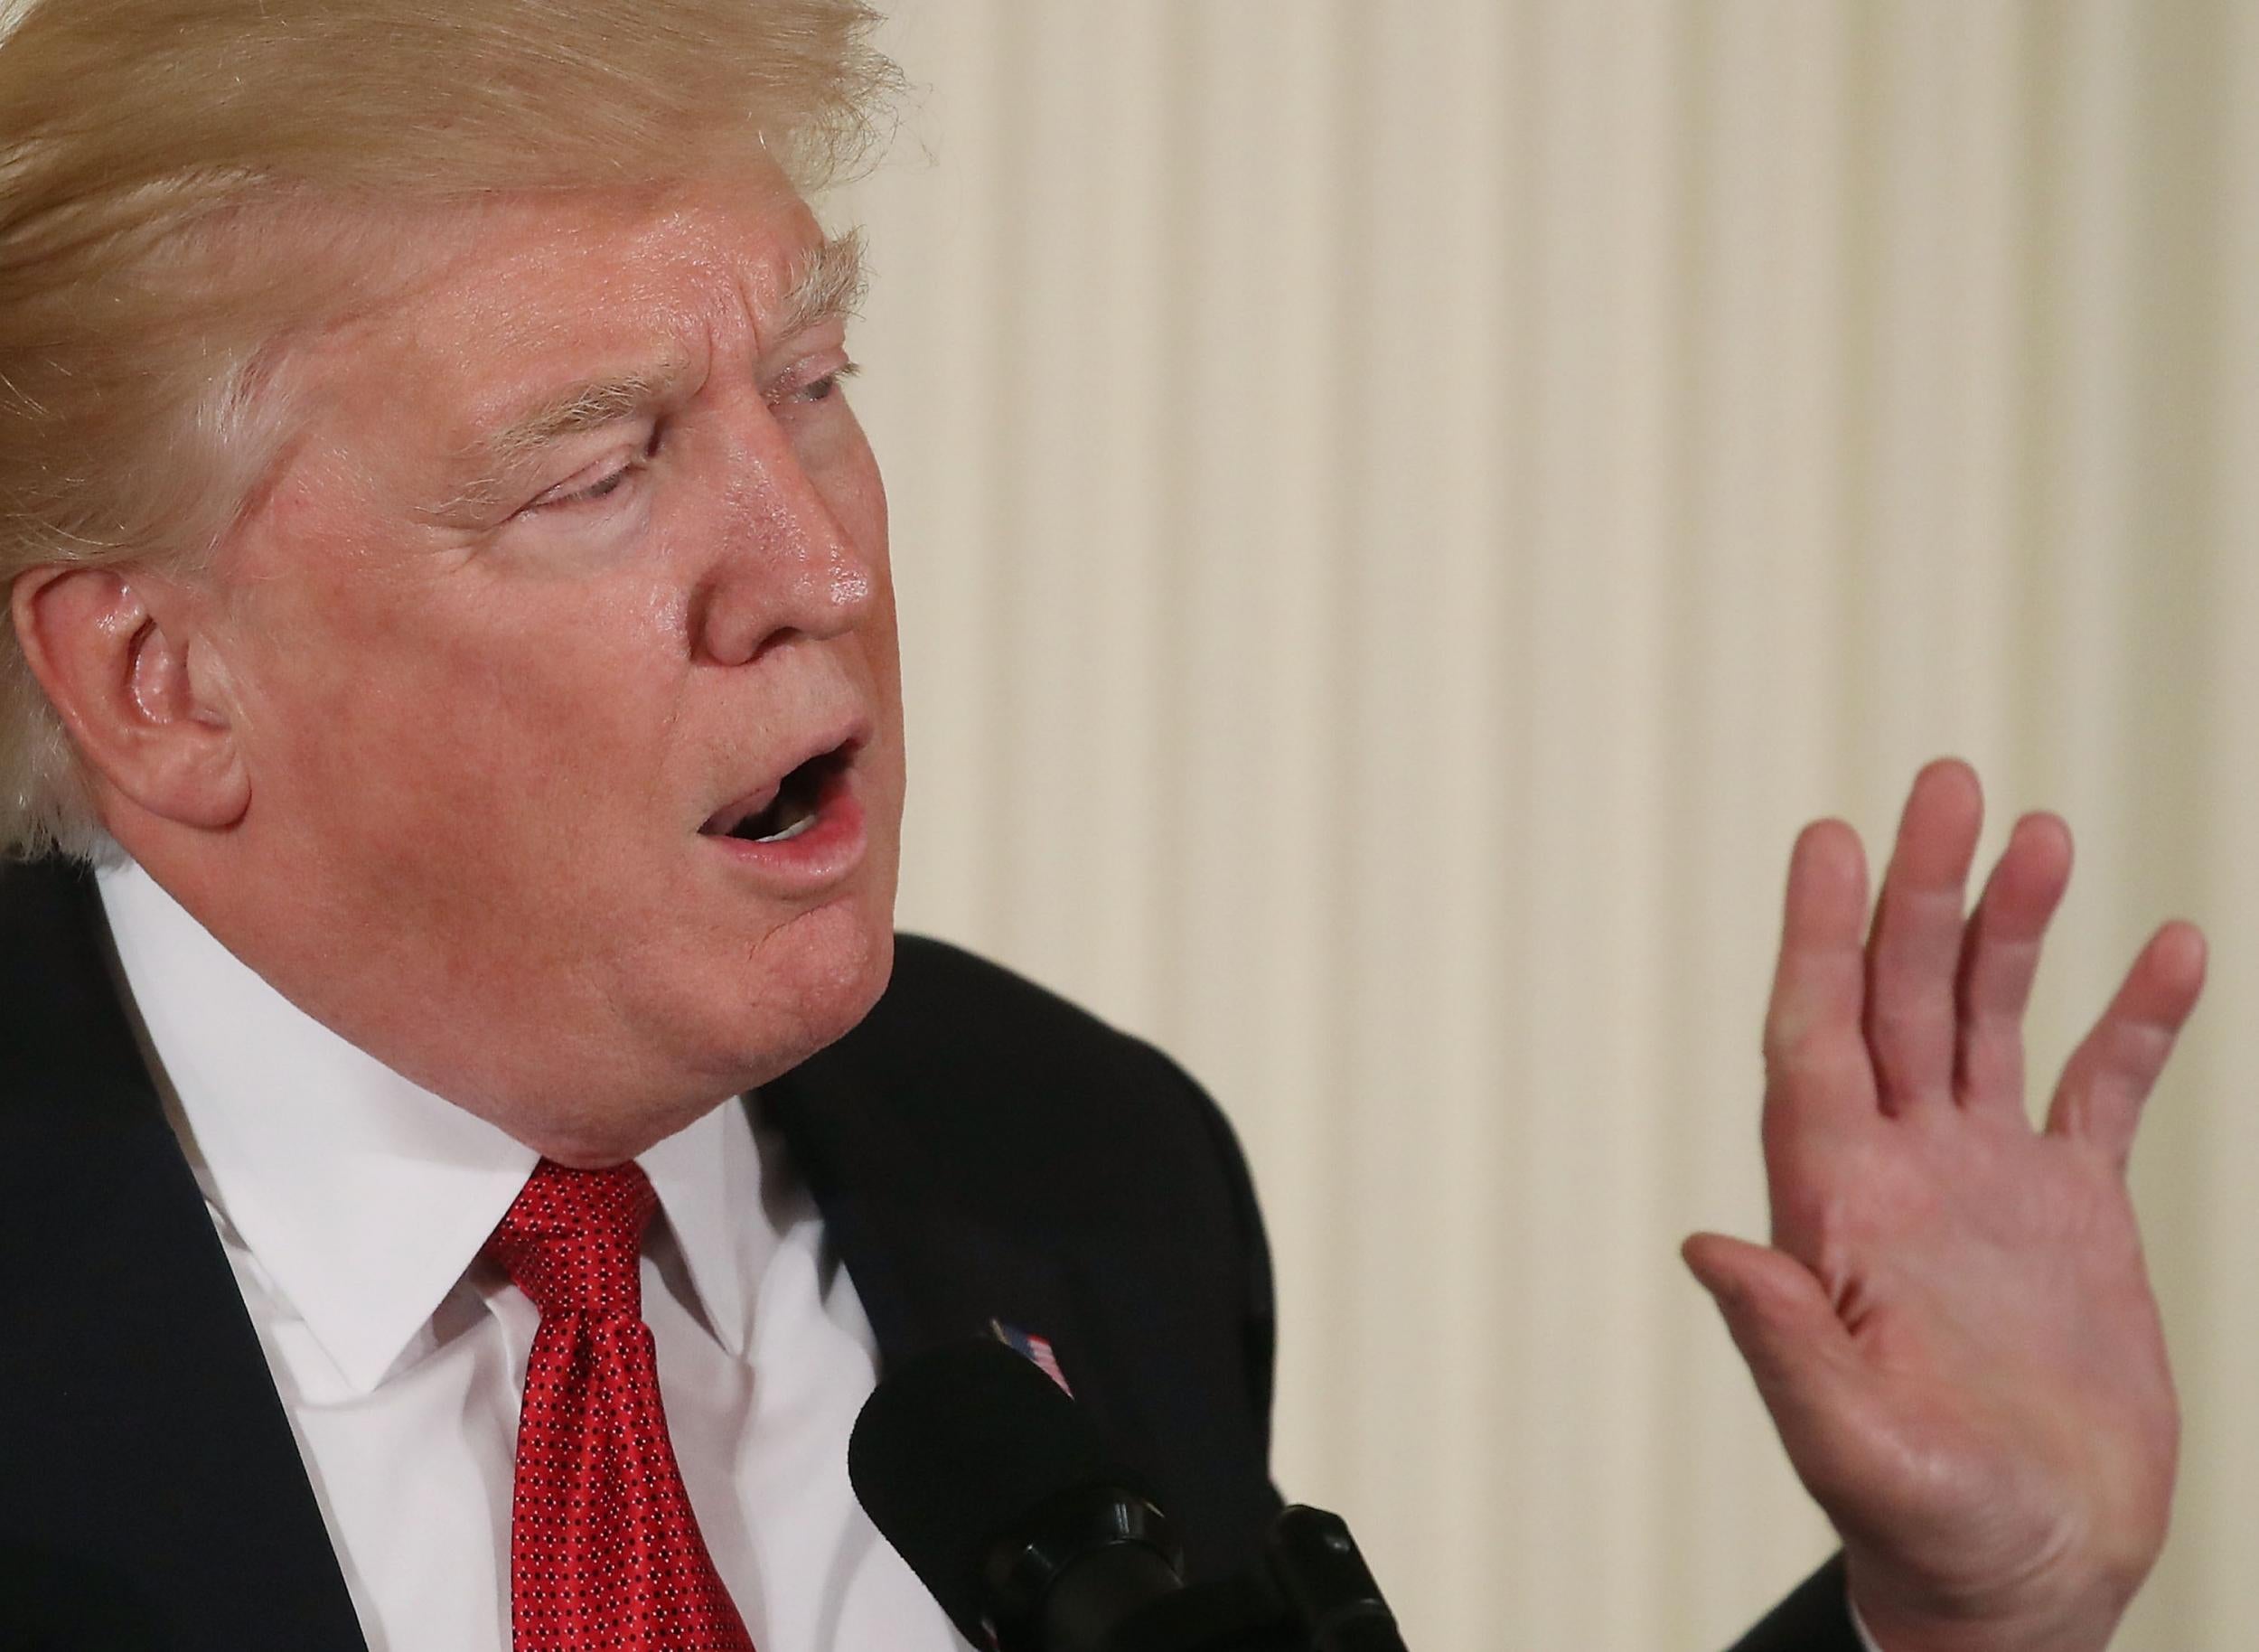 Mr Trump called his accusers 'sick'